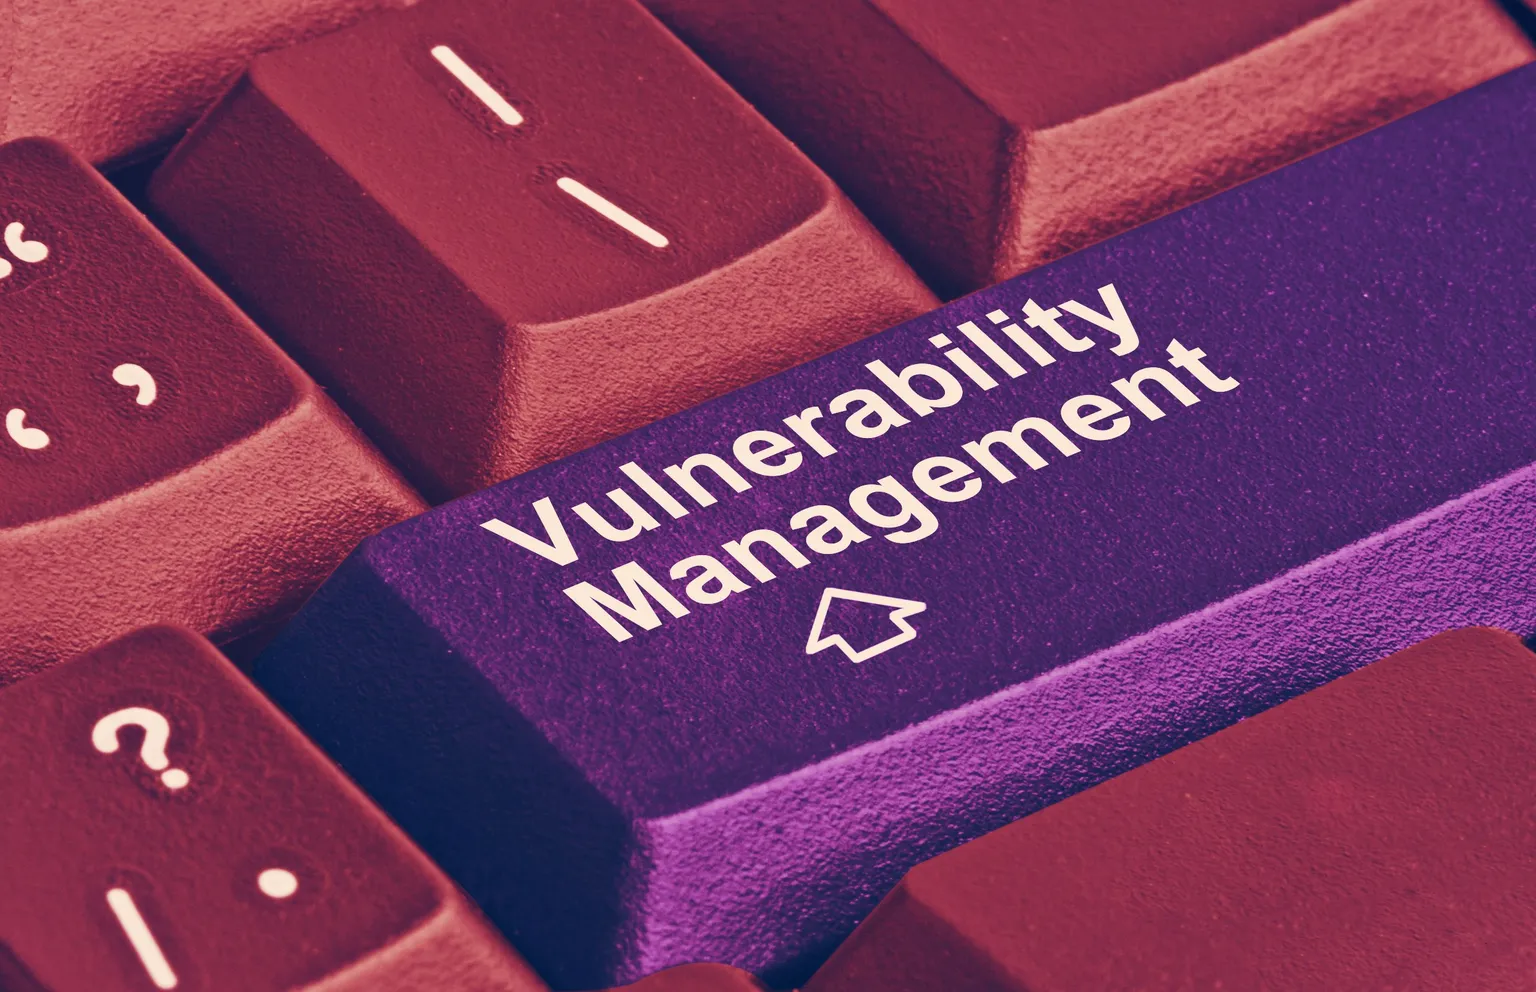 System vulnerabilities are still a work in progress in DeFi